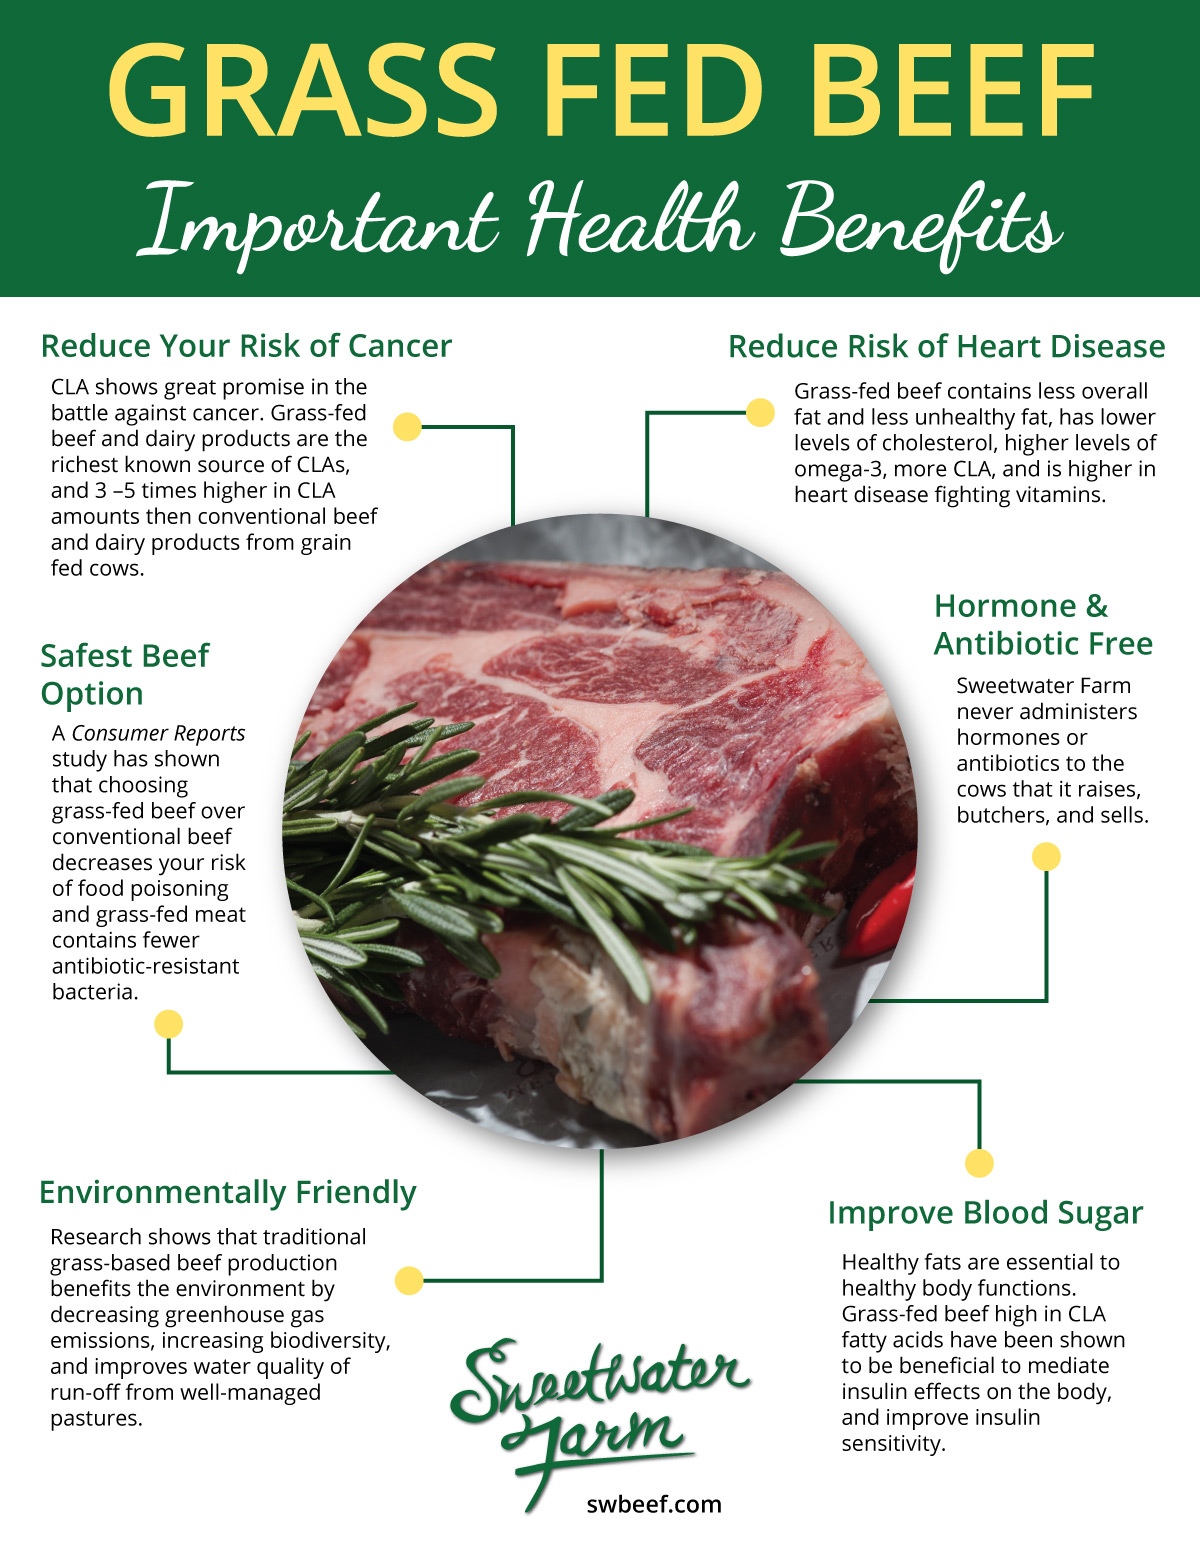 swbeef health benefits